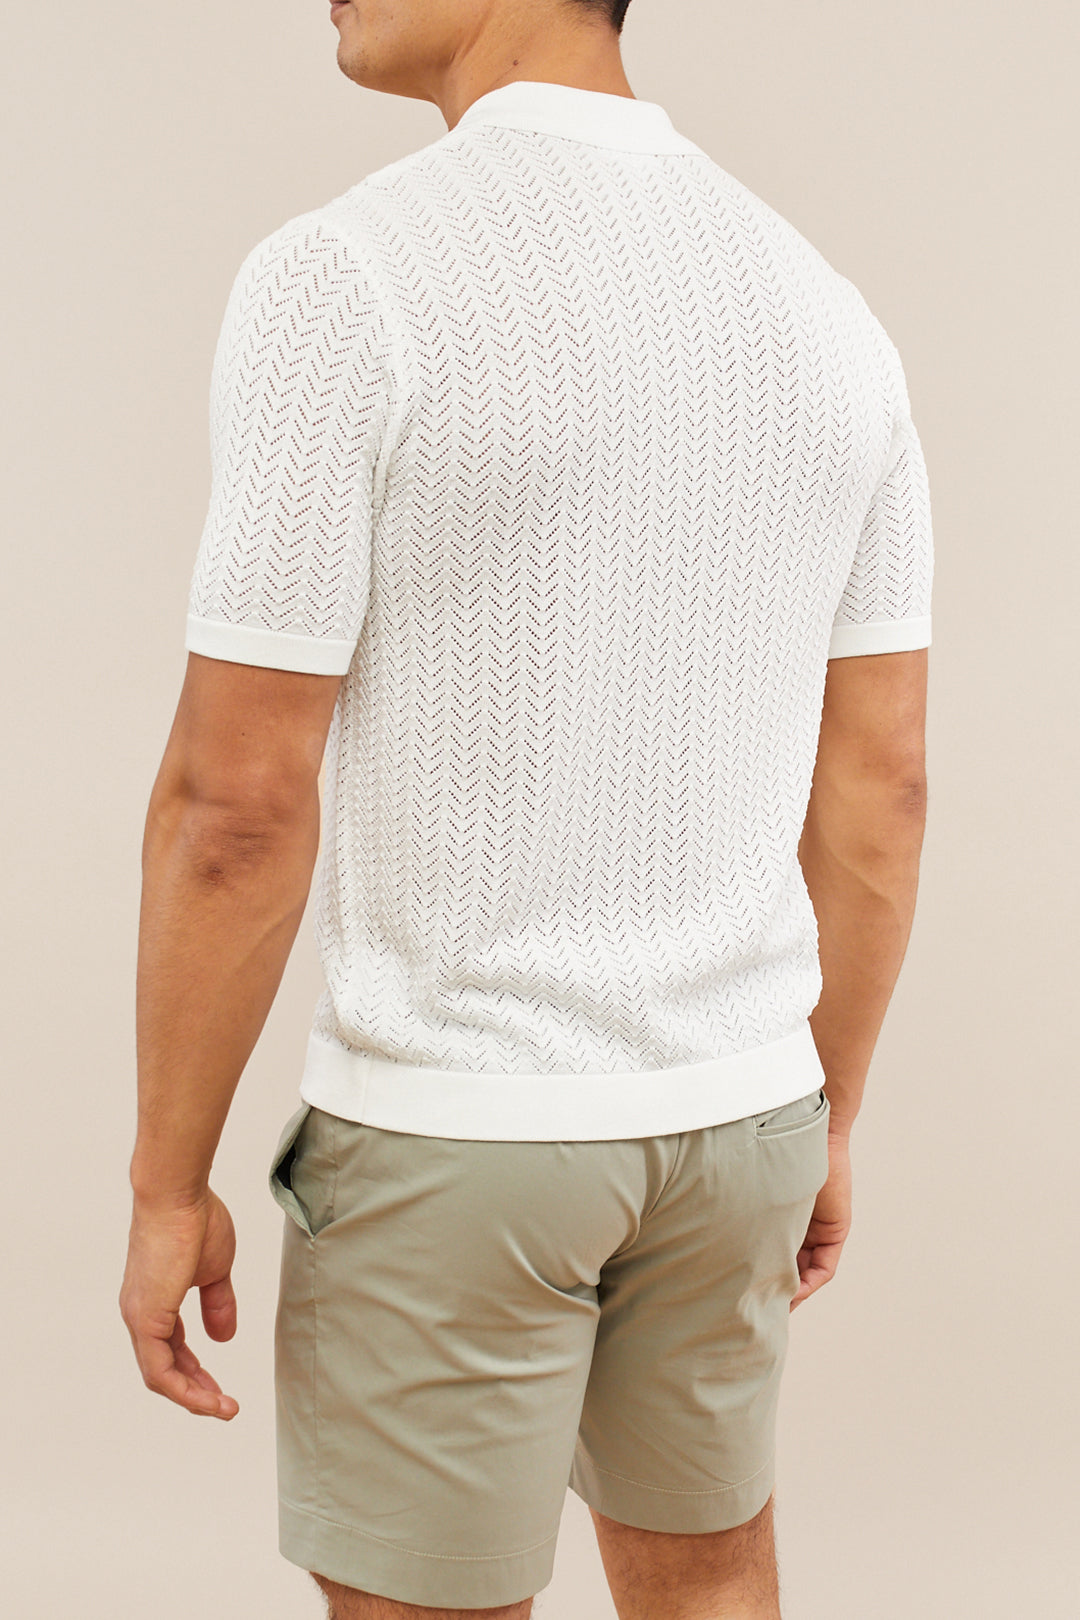 Torre Crochet Button Down Shirt - White